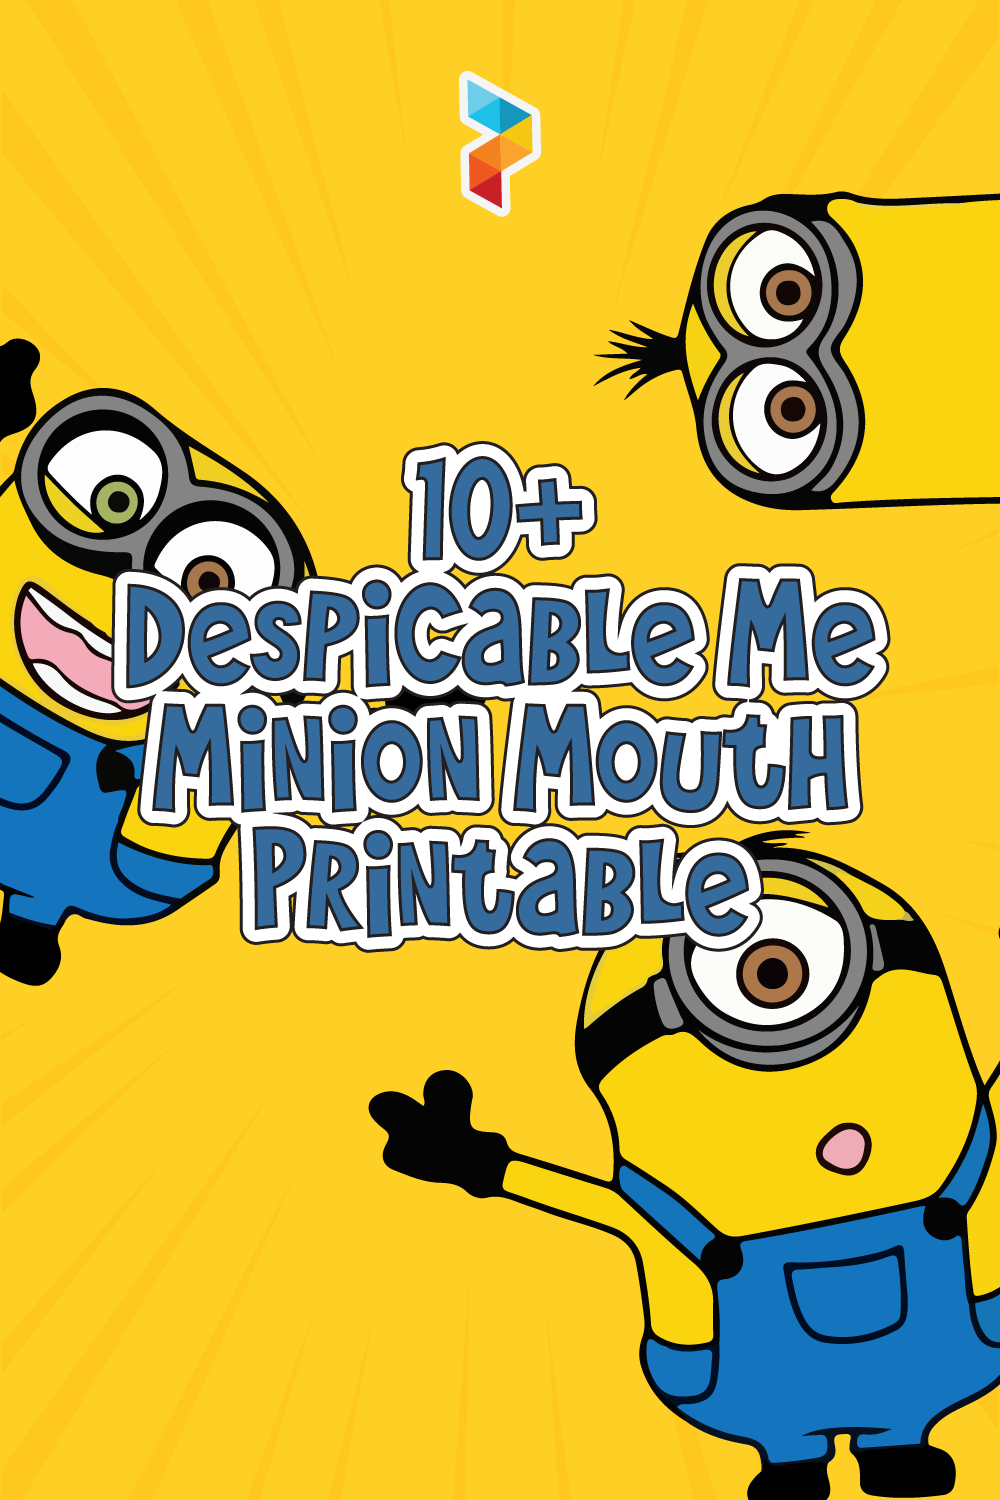 Despicable Me Minion Mouth